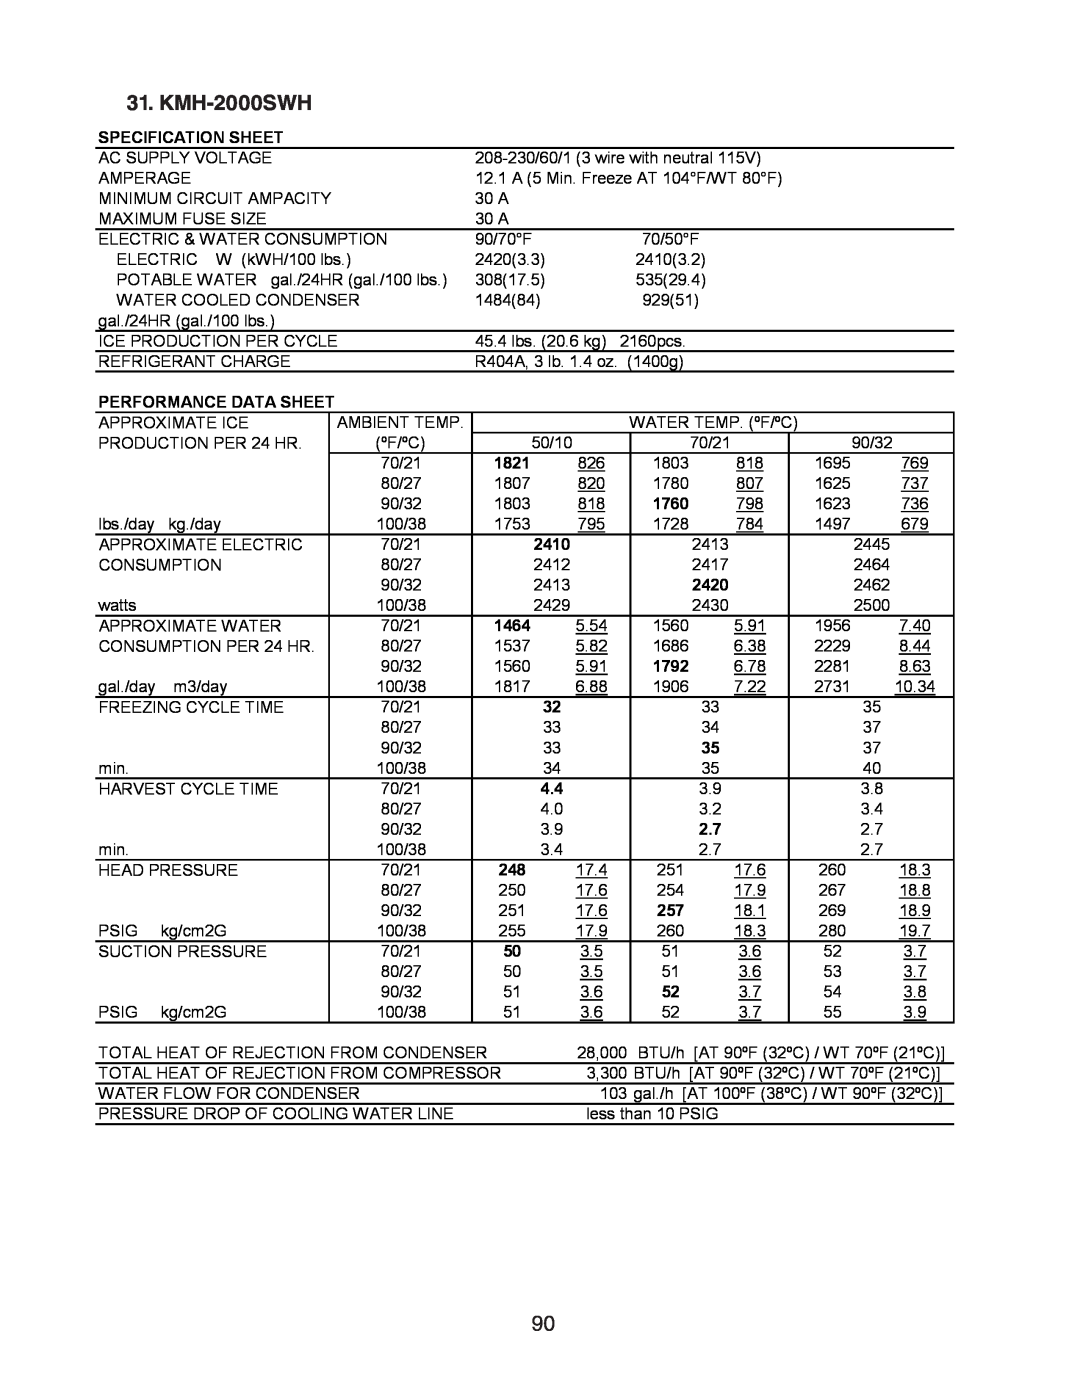 Hoshizaki SRH/3 KM-2100SWH3, KM-1301SAH/3 KMH-2000SWH, Specification Sheet, Performance Data Sheet, 1821, 2410, 1464 